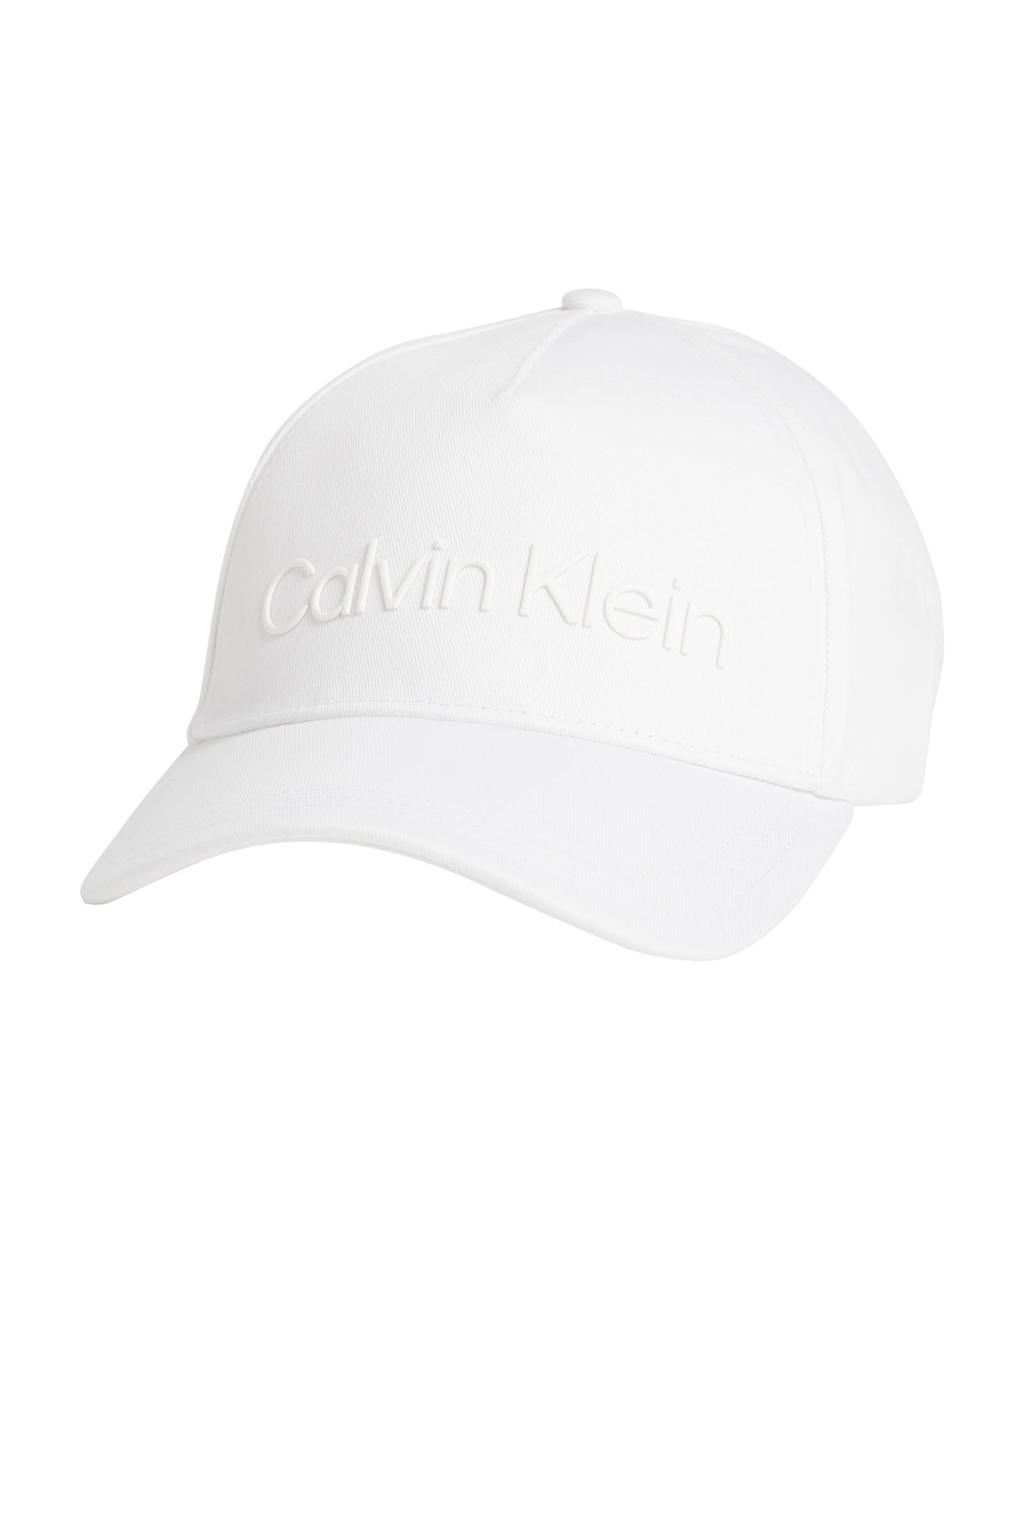 Calvin Klein pet met logo wit